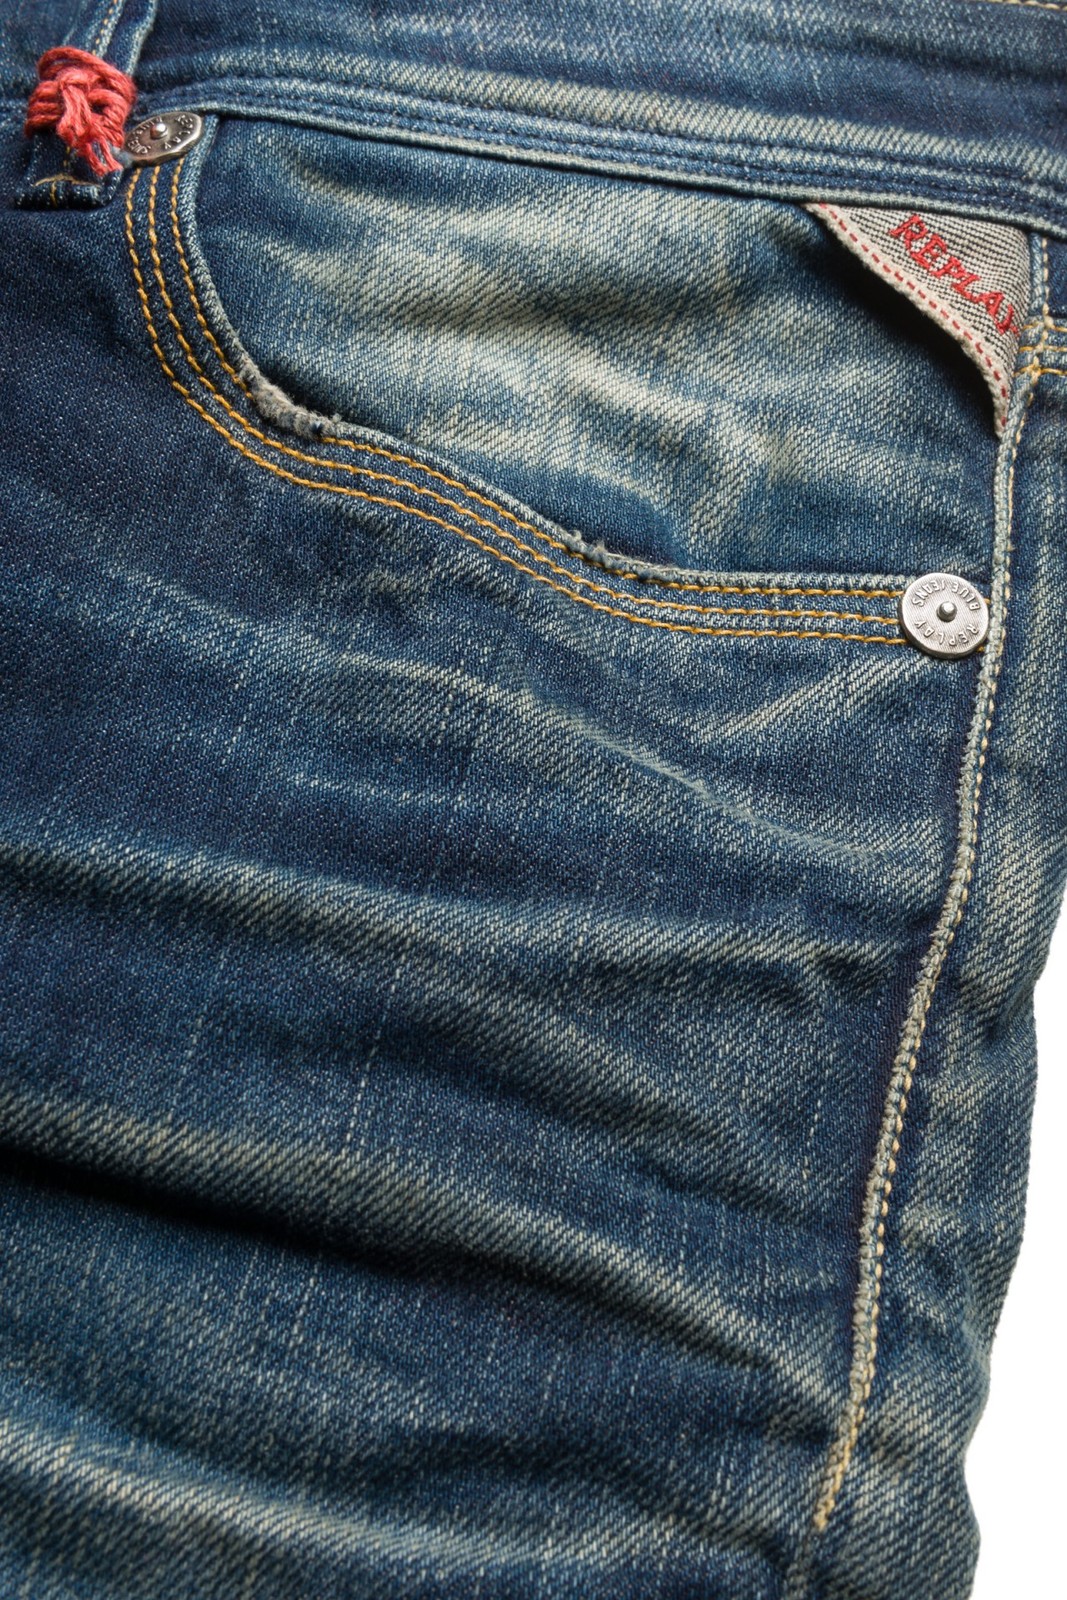 Replay boyfriend jeans 2014.4.1 #51711 fotója